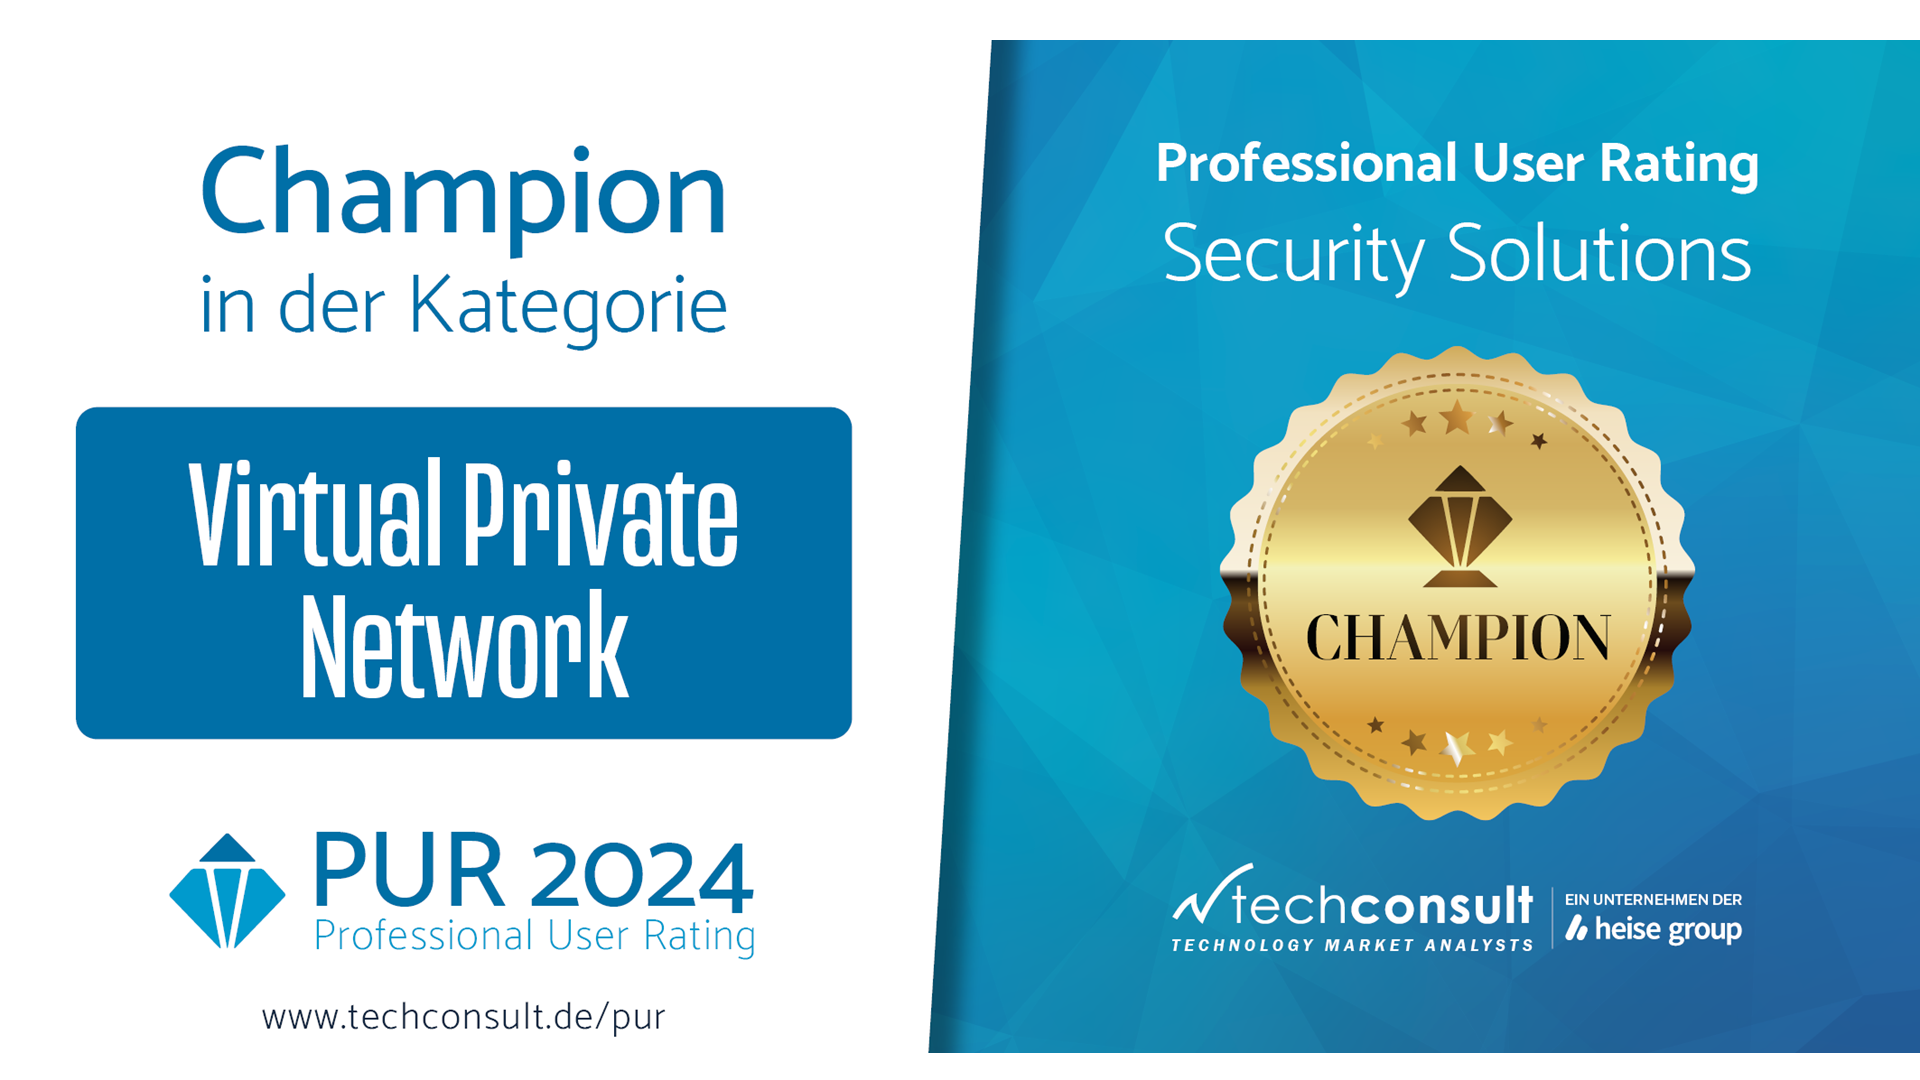 Professional User Rating 2022 Champion Award for LANCOM VPN solution